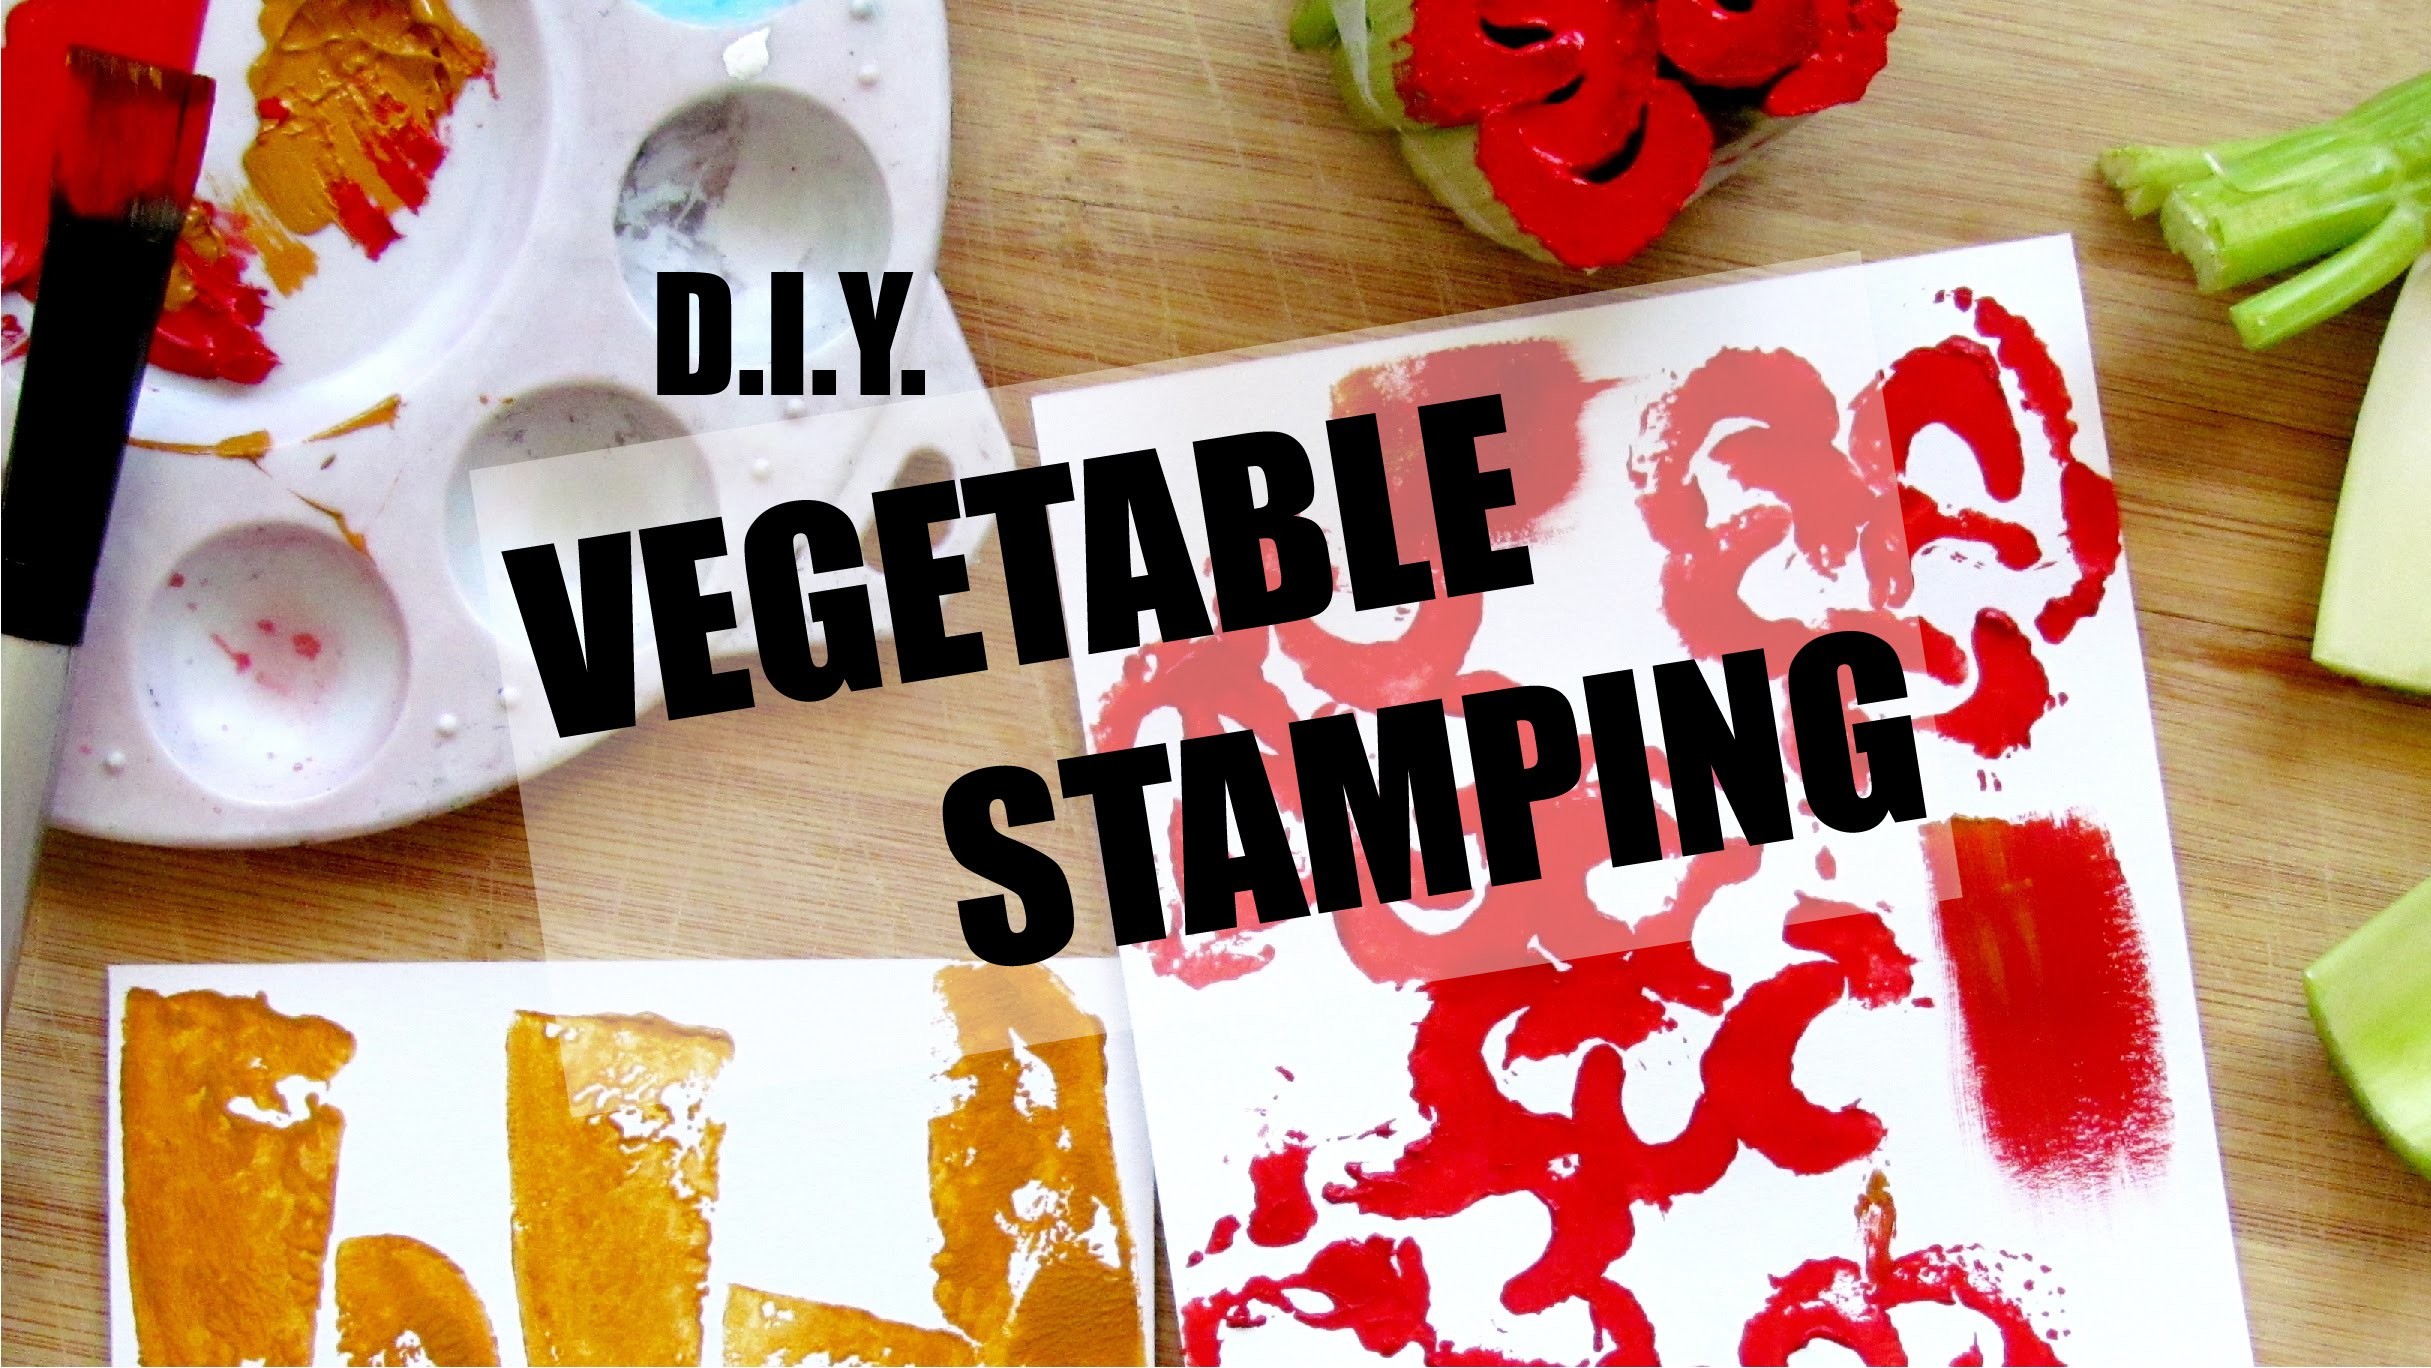 DIY Vegetable Stamping (Decor Idea!) | NANCY MAC